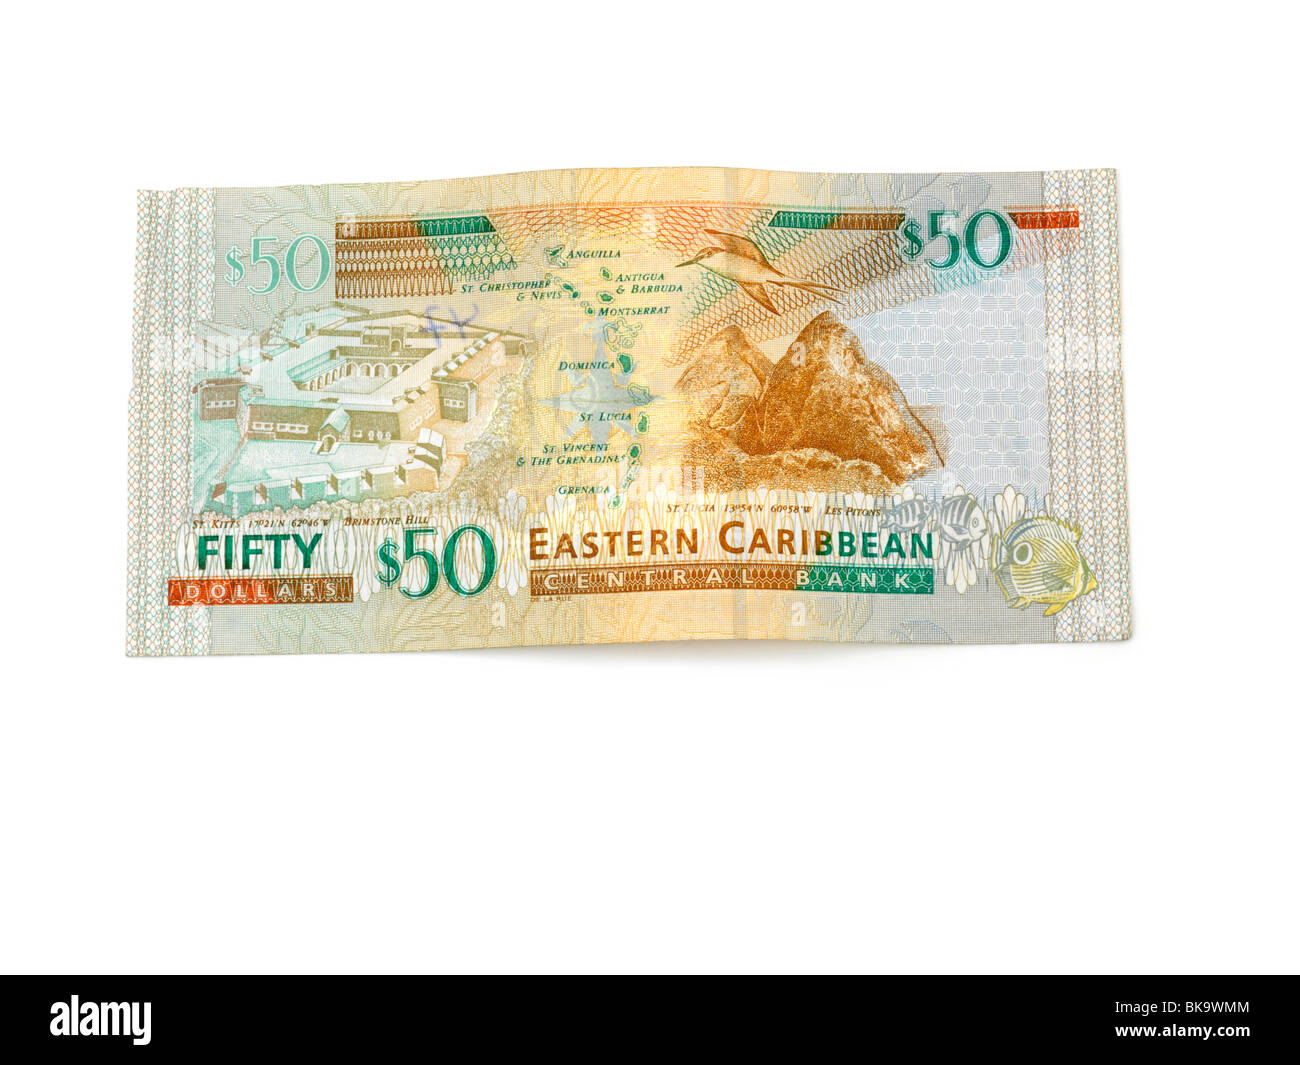 Östliche Karibik Banknote 50 Dollar Stockfoto